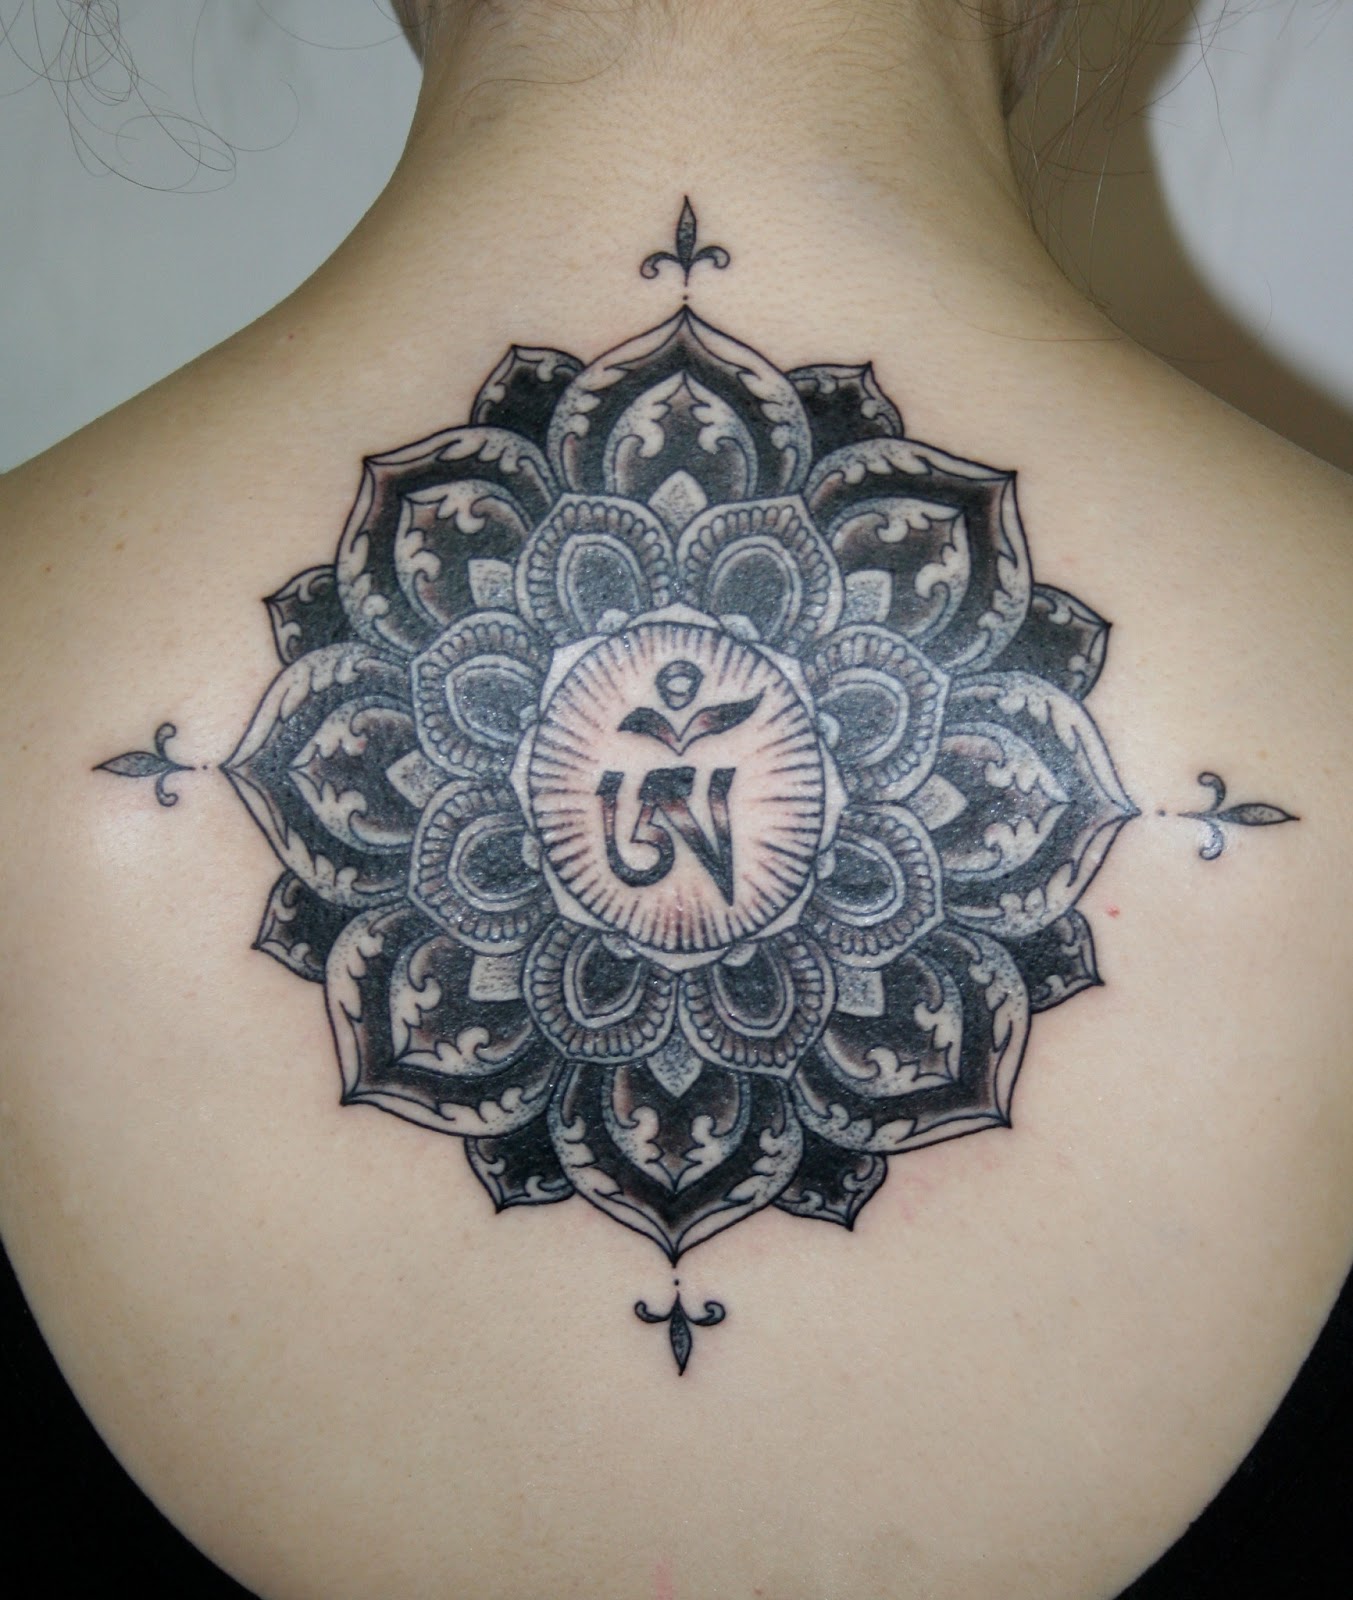 Lotus mandala tattoo